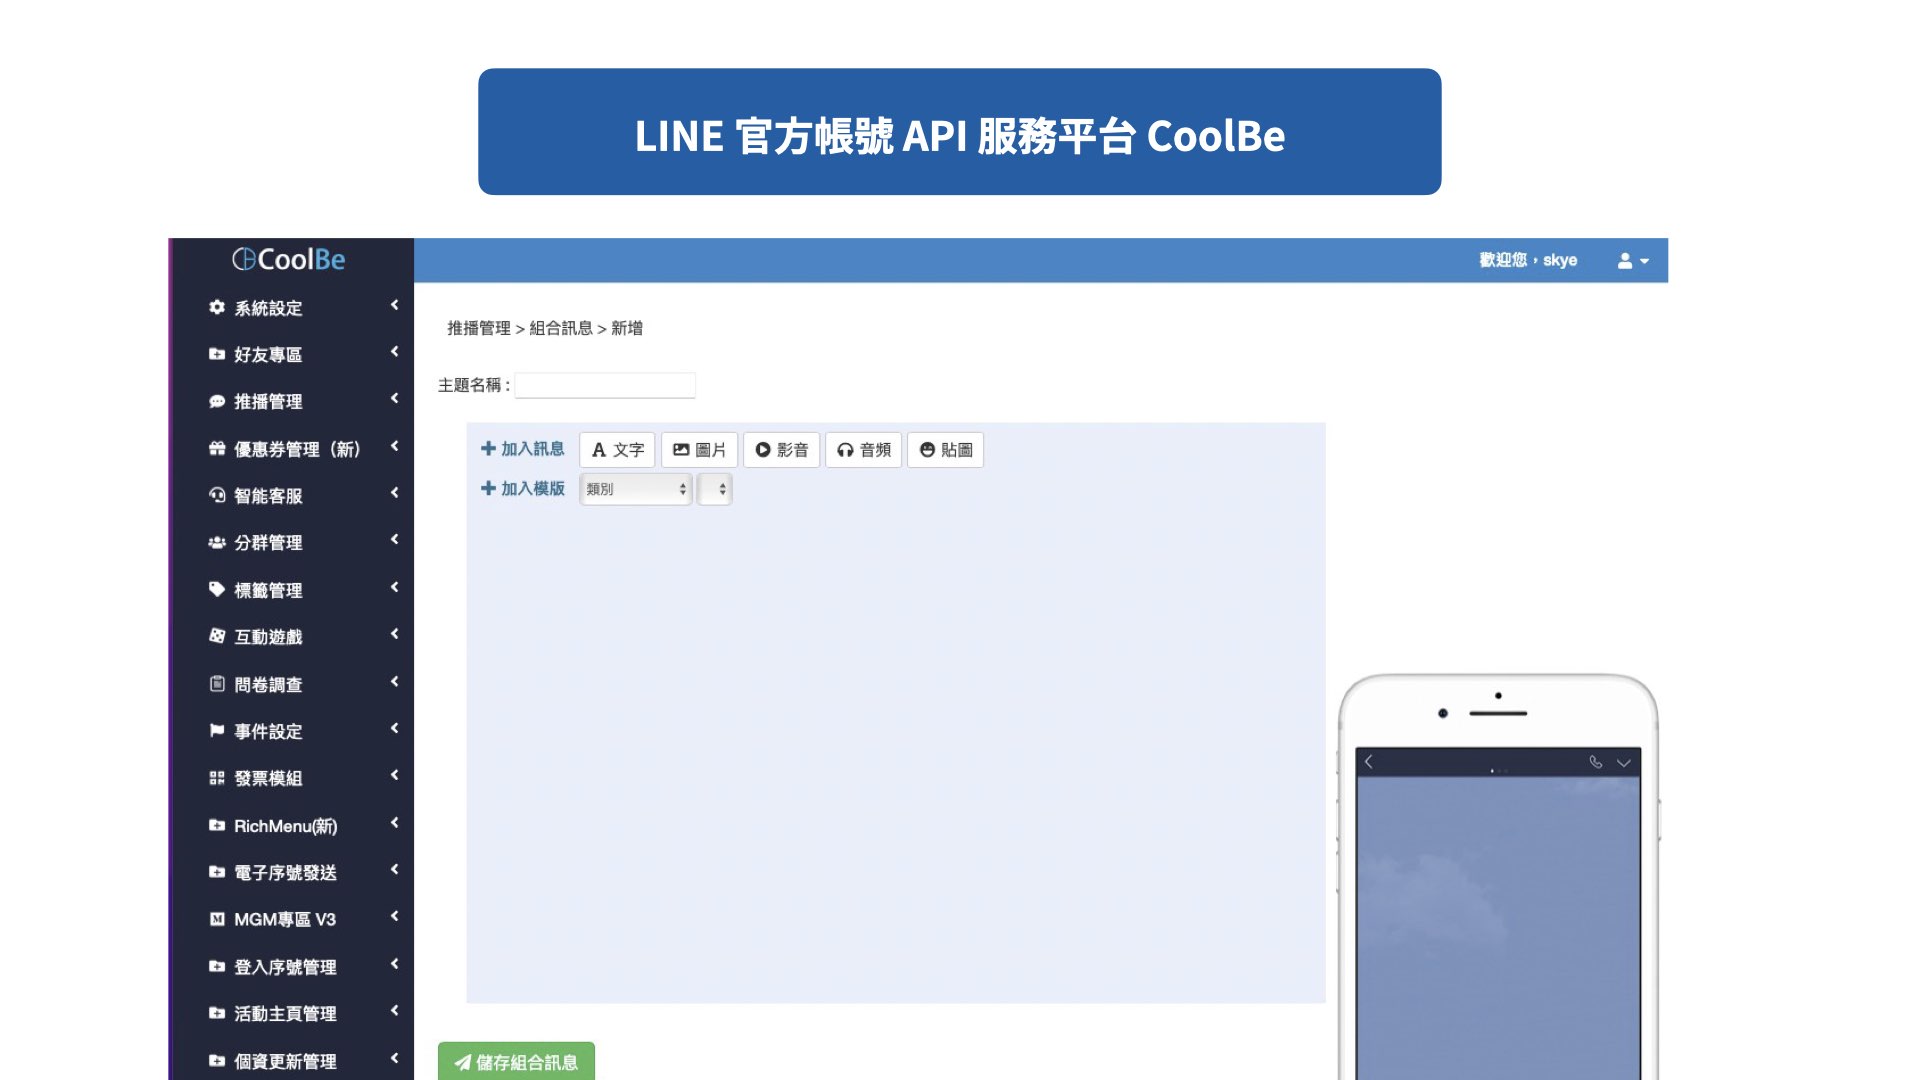 LINE官方帳號API 服務平台 CoolBe